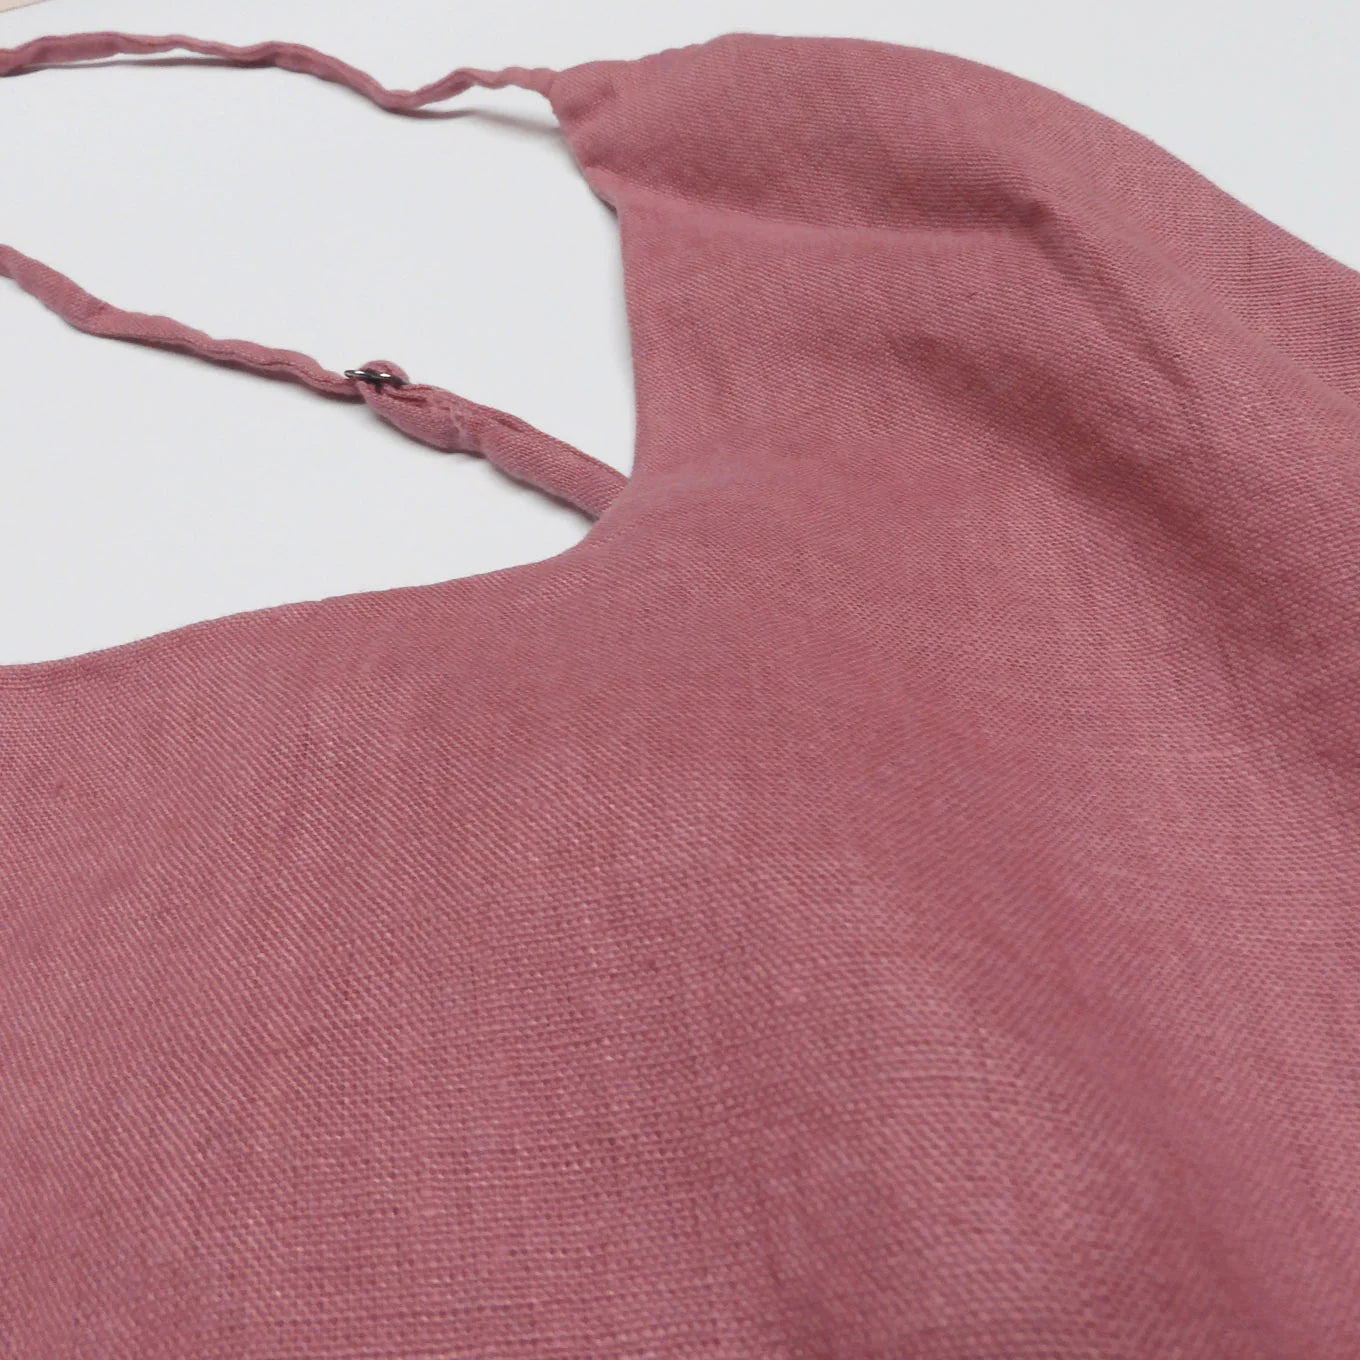 Fleur Linen Camisole - Dusty Pink